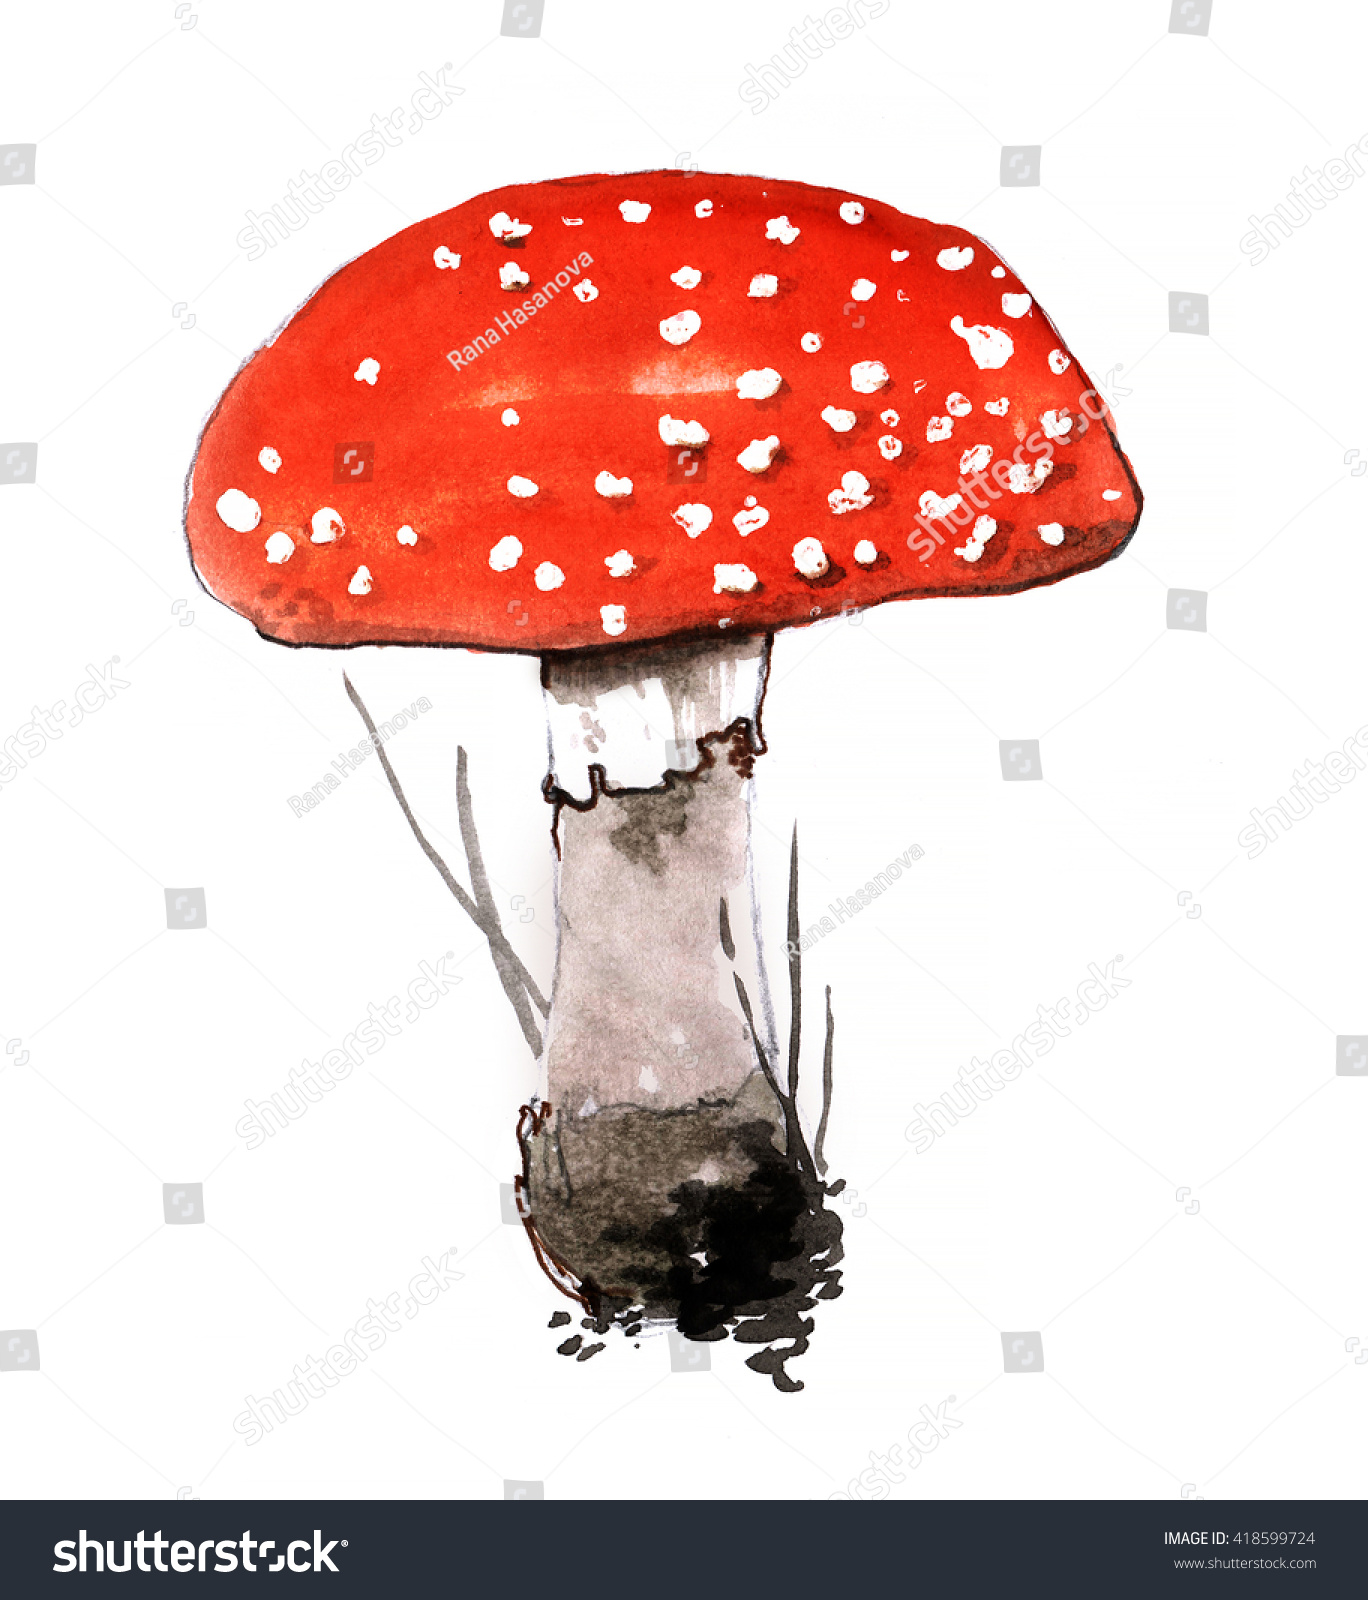 Watercolor Mushroom Fly Agaric Amanita Muscaria のイラスト素材